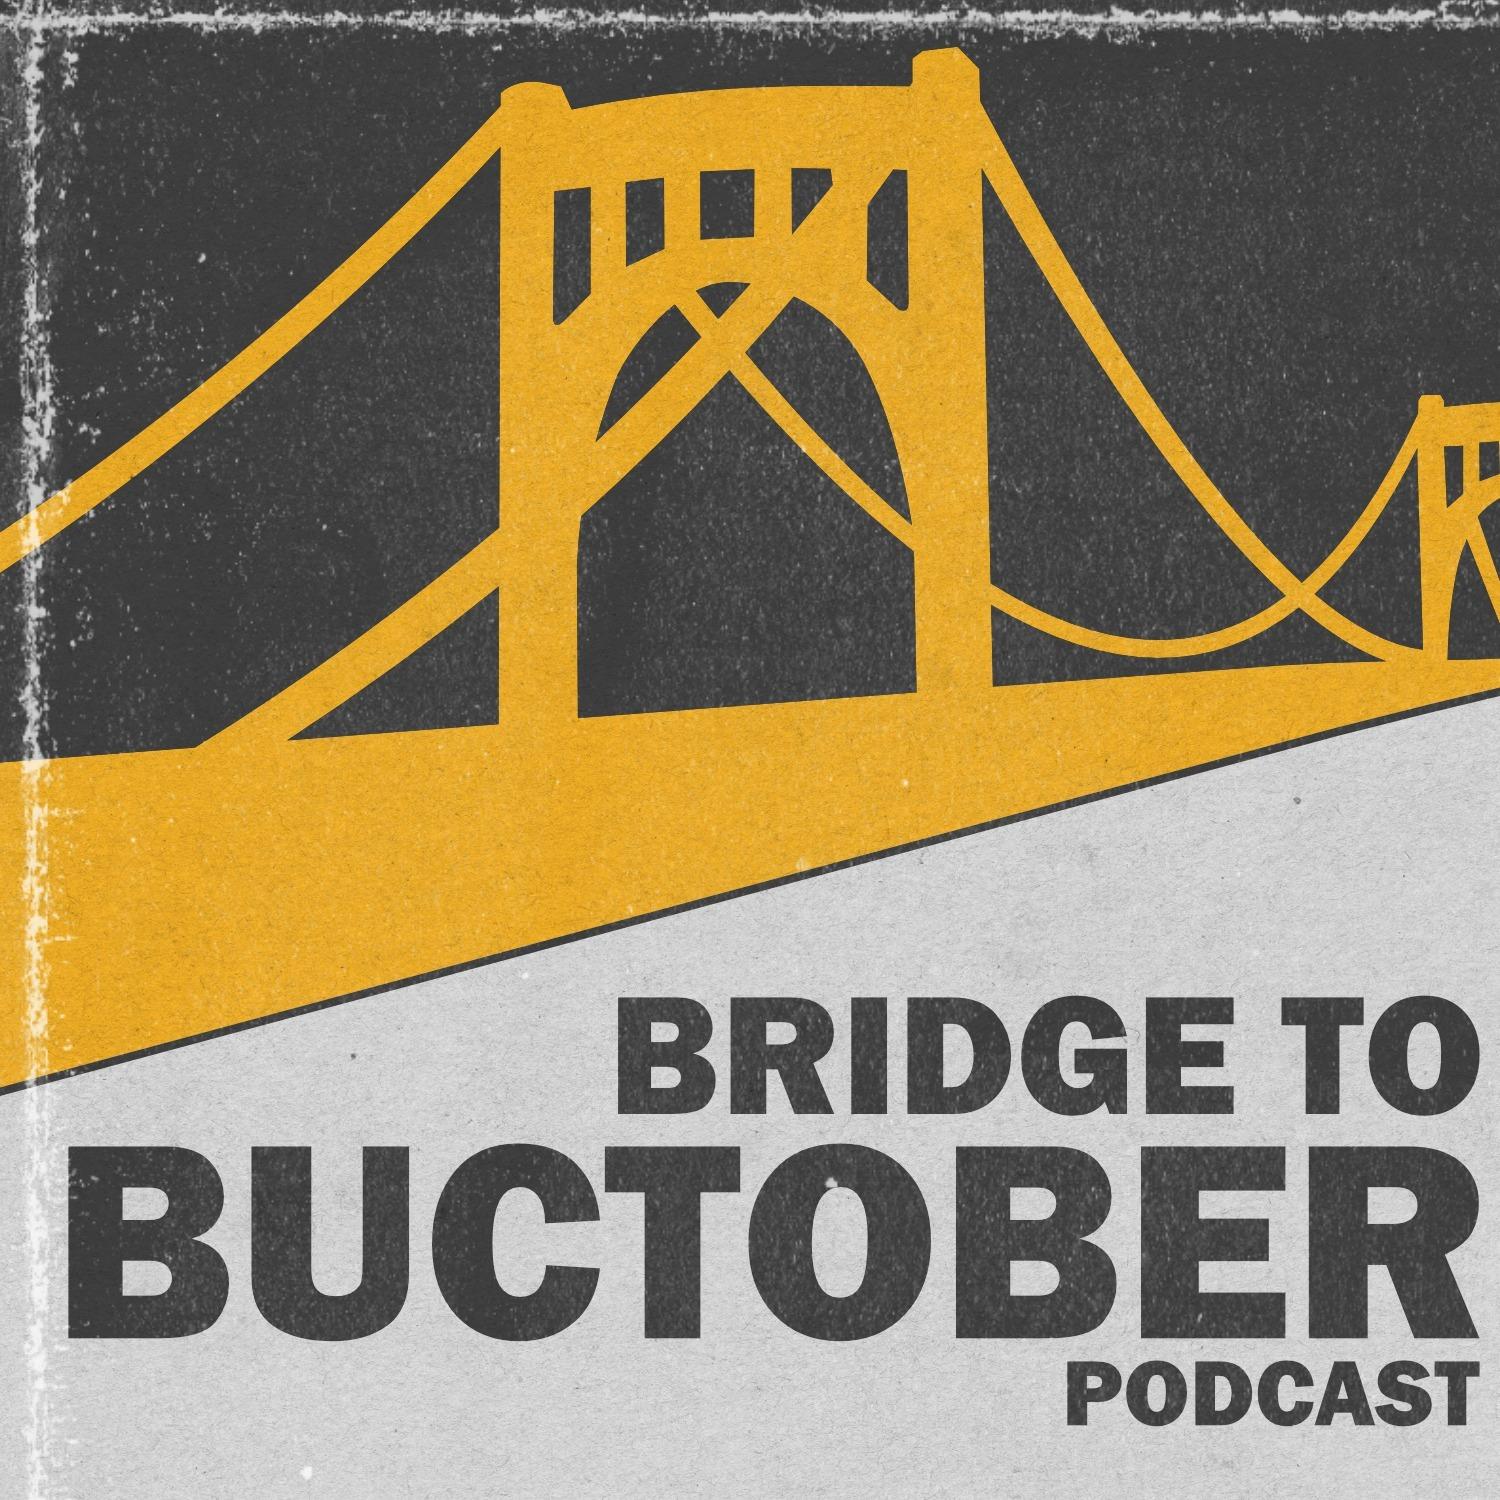 Bridge to Buctober Podcast